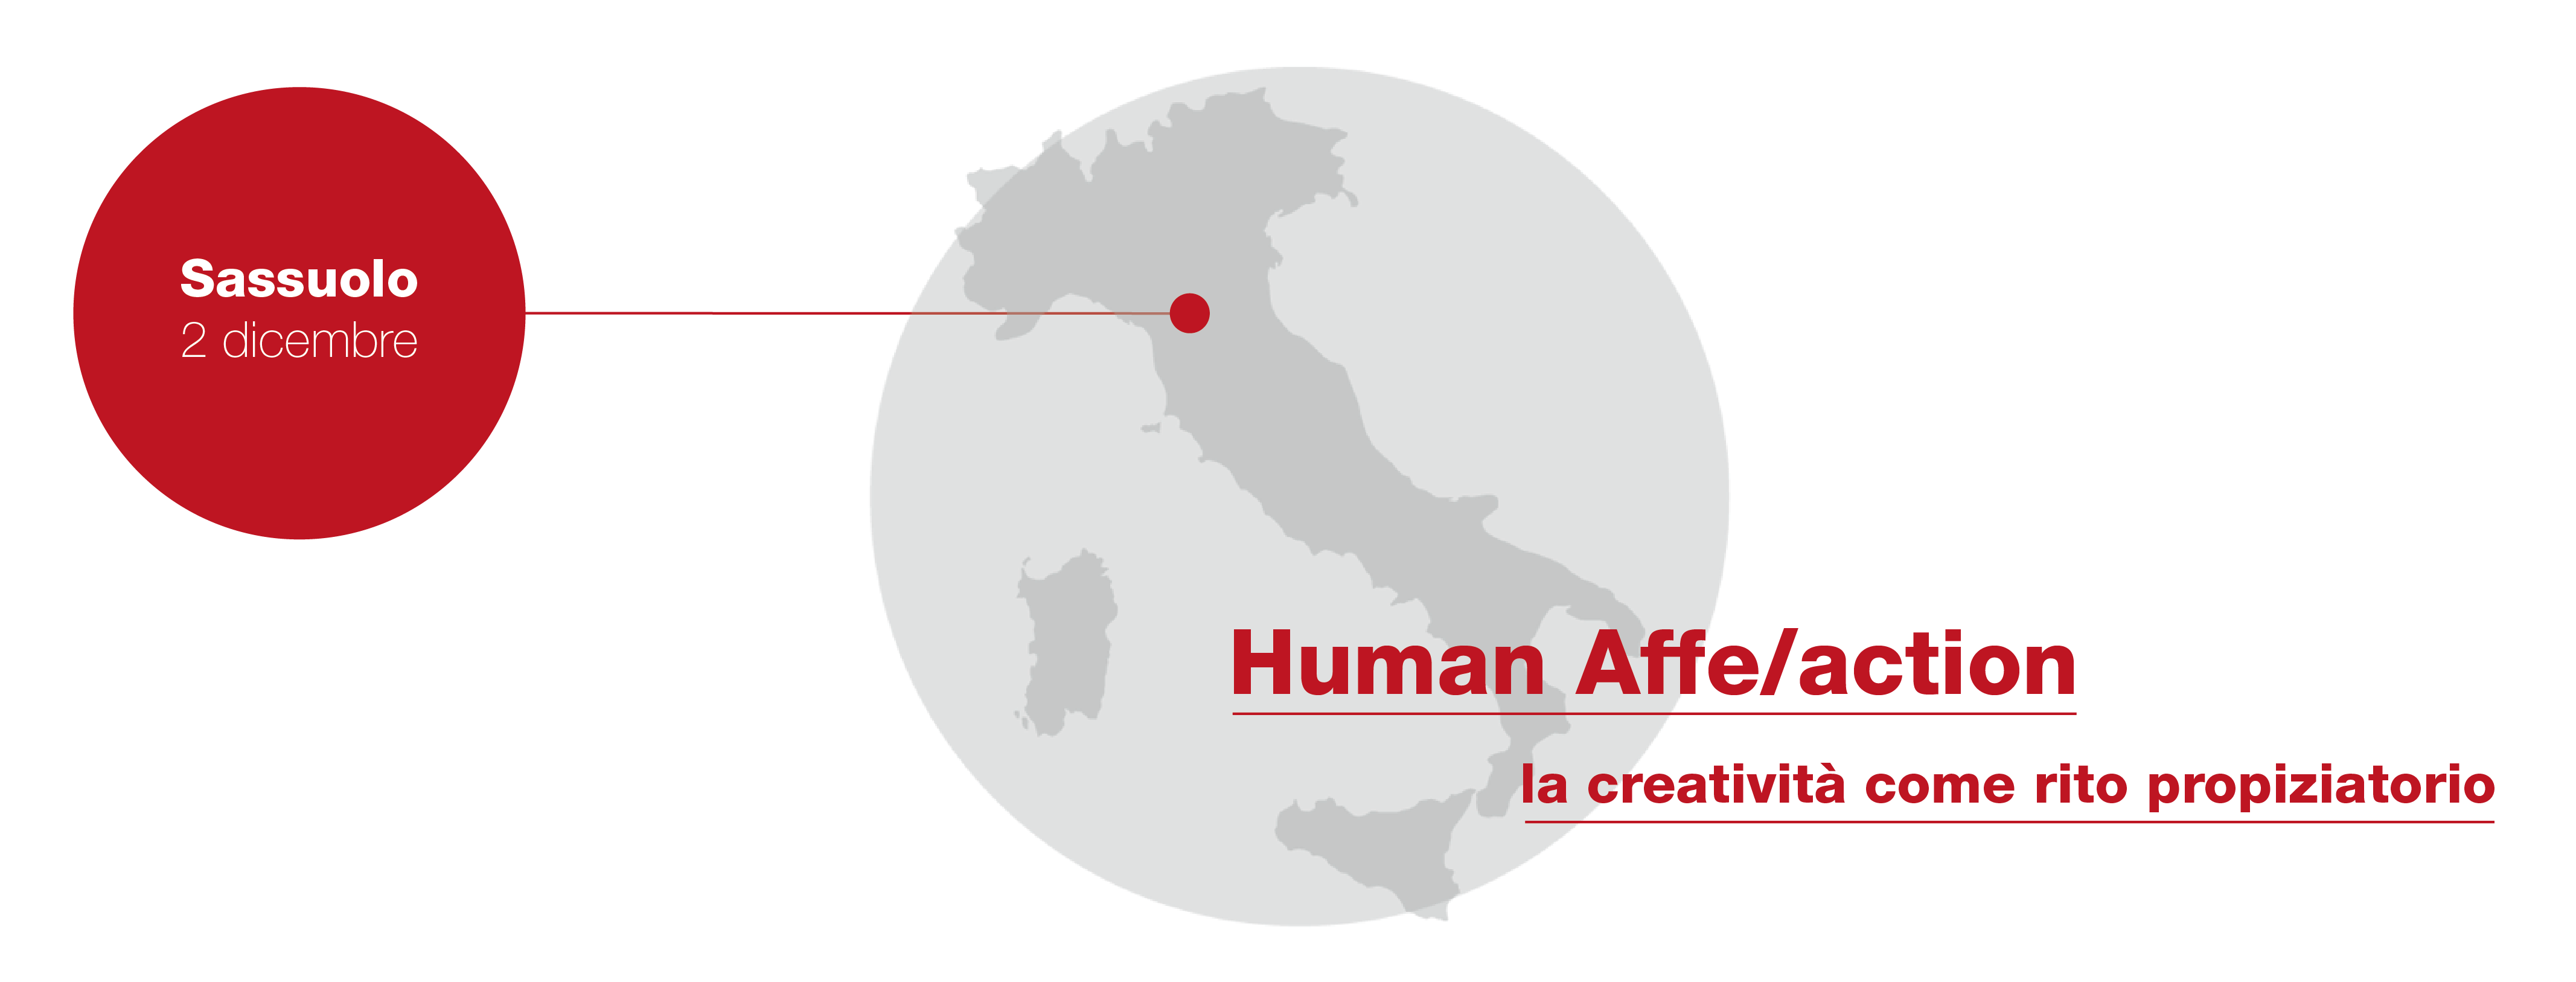 Human Affe/action